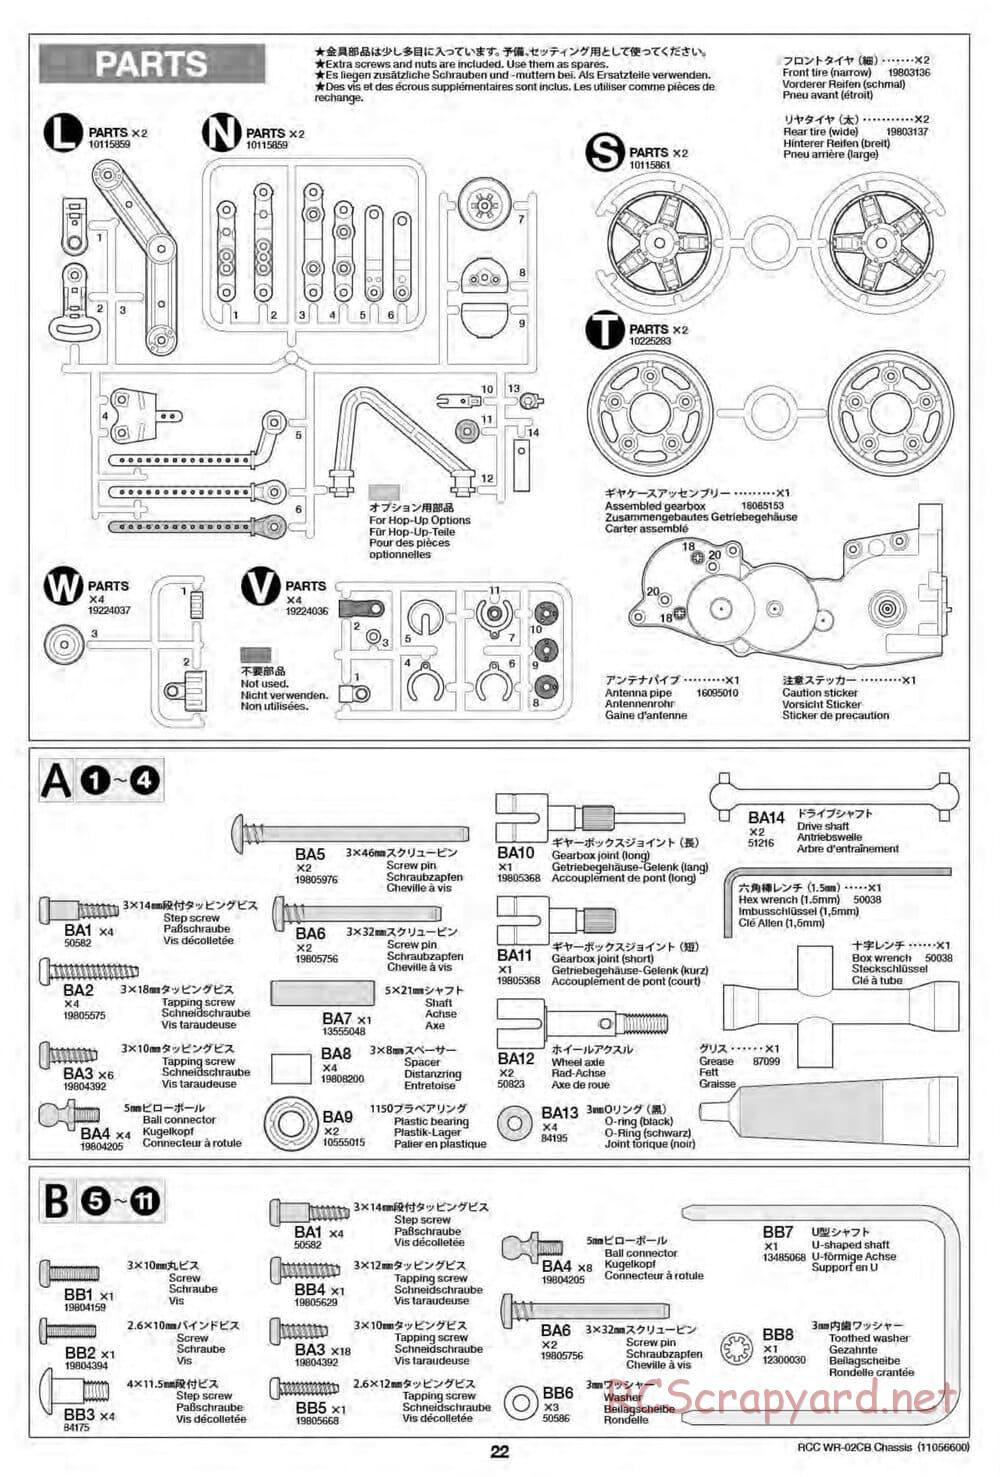 Tamiya - WR-02CB Chassis - Manual - Page 22